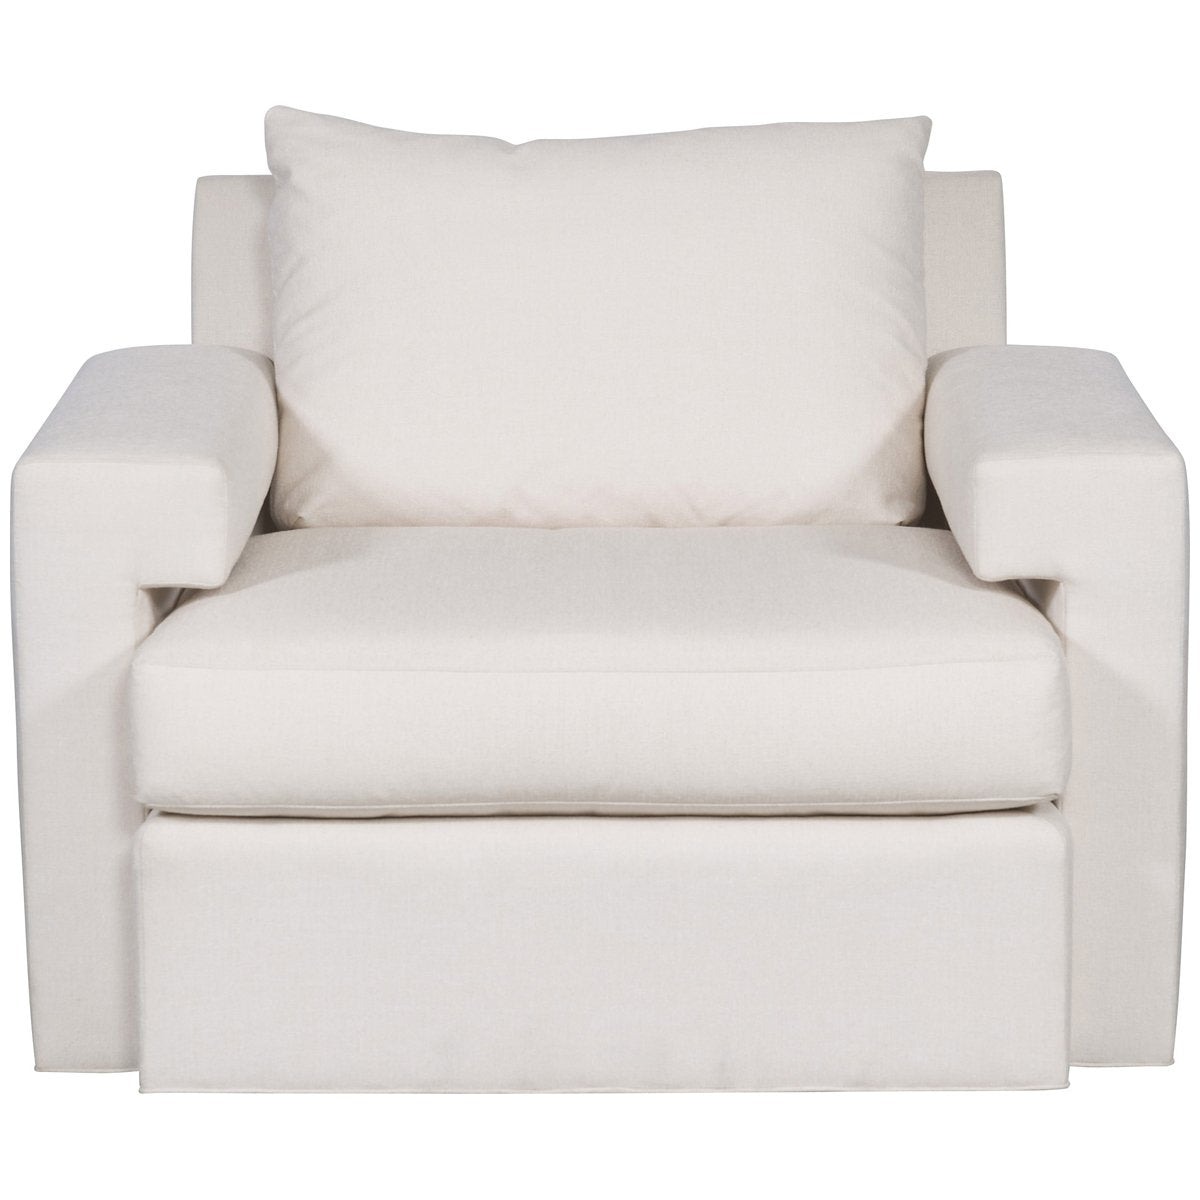 Vanguard Furniture Ferriday Chair